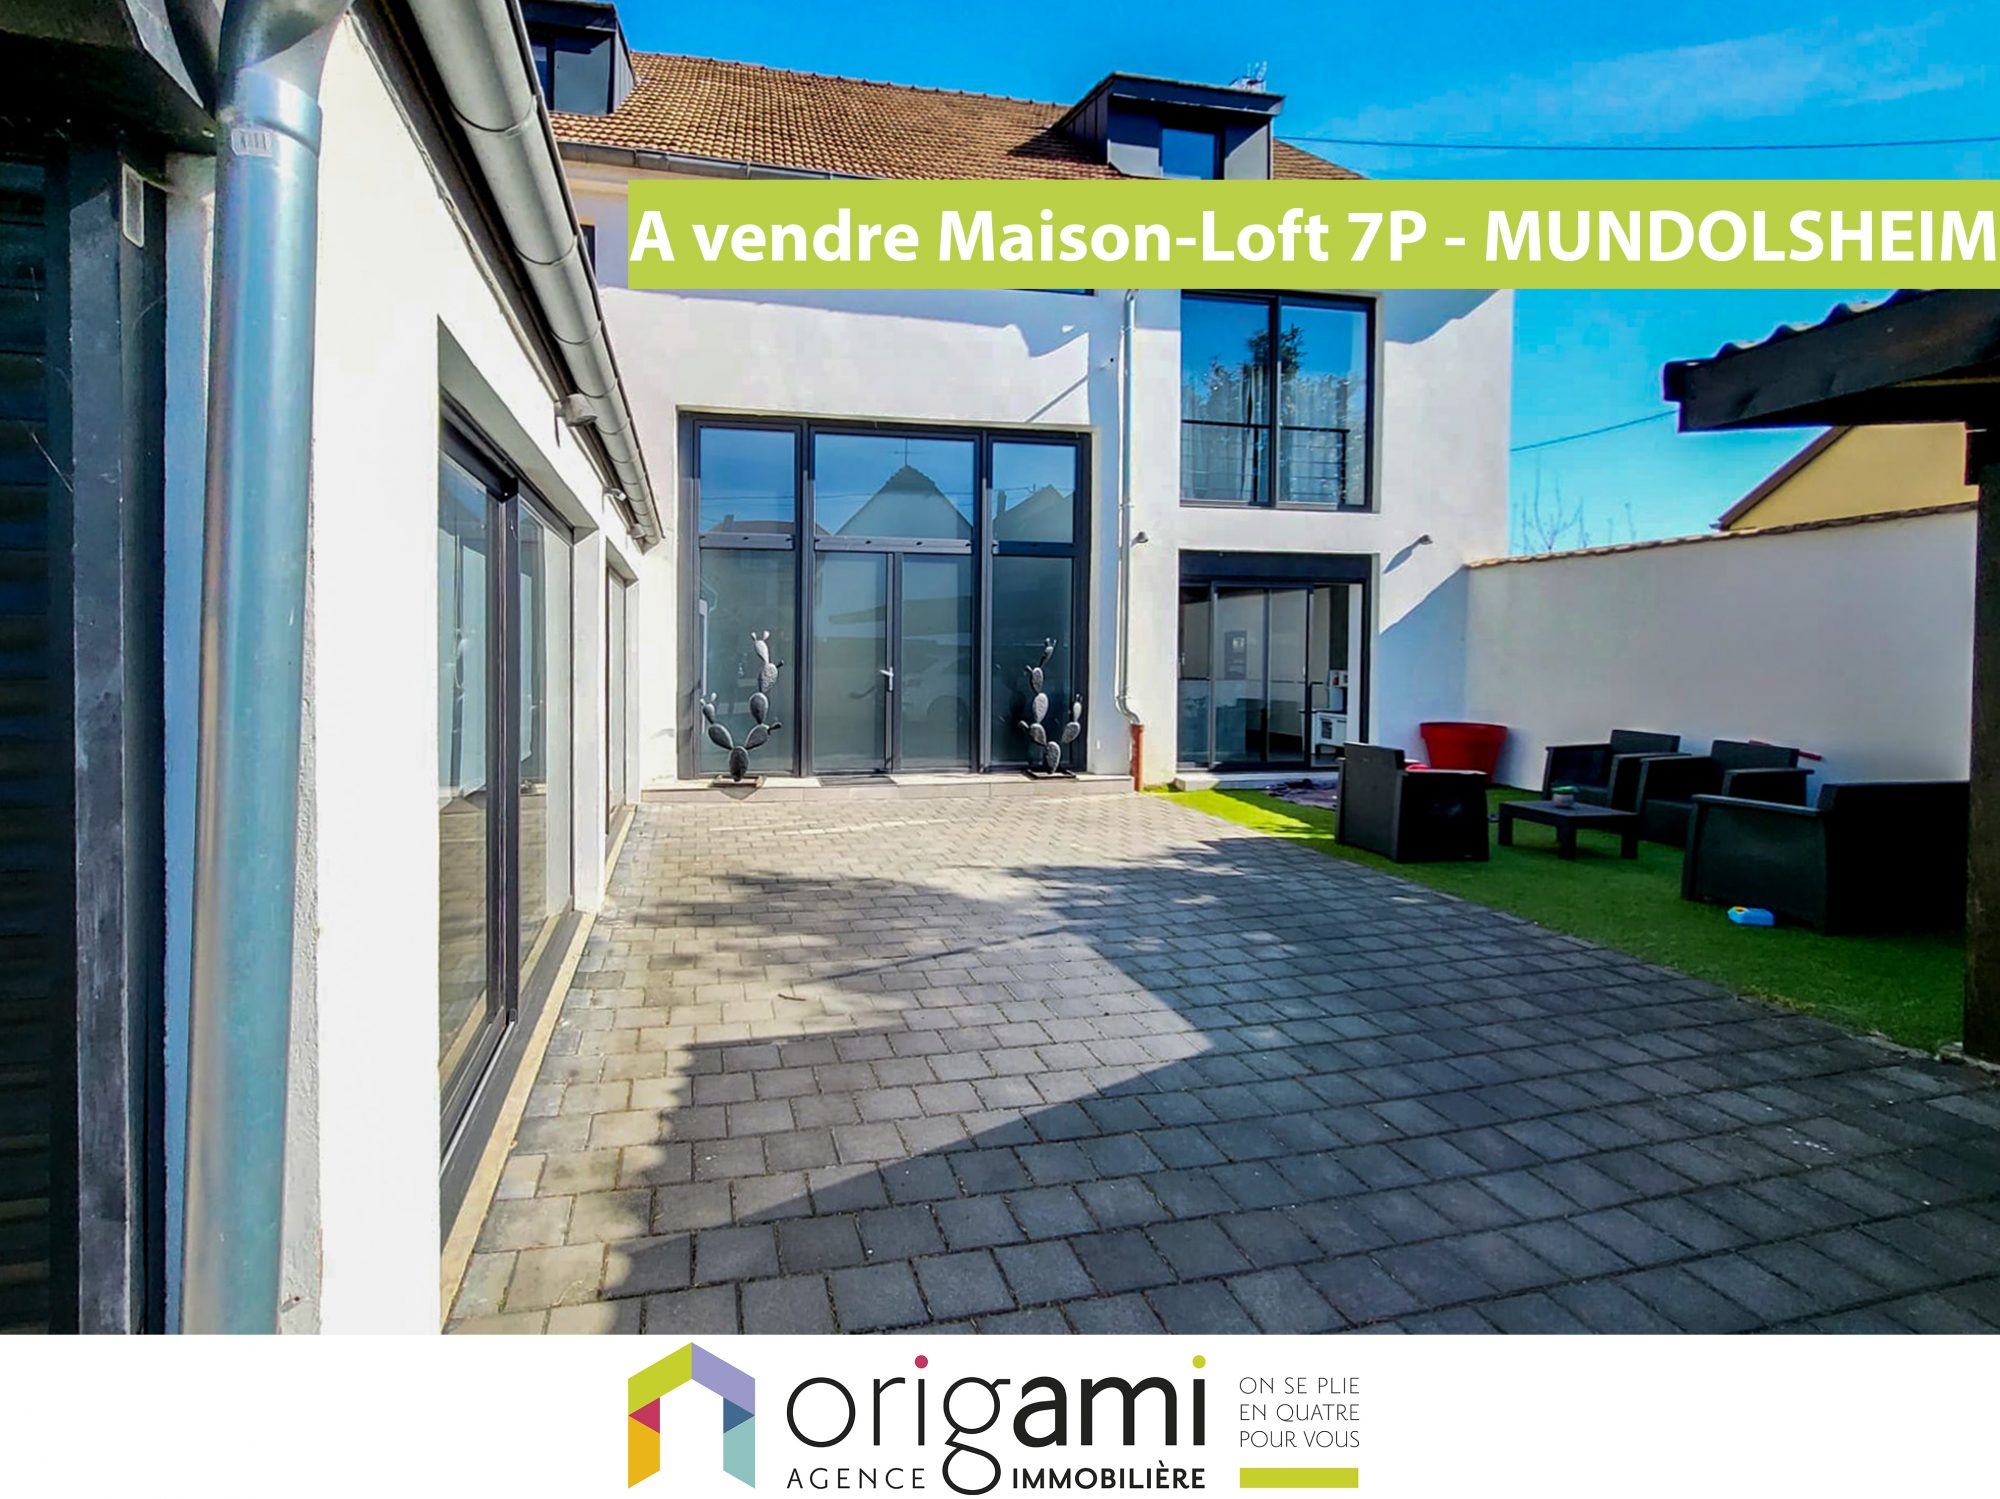 Vente Maison 524m² 13 Pièces à Mundolsheim (67450) - Origami